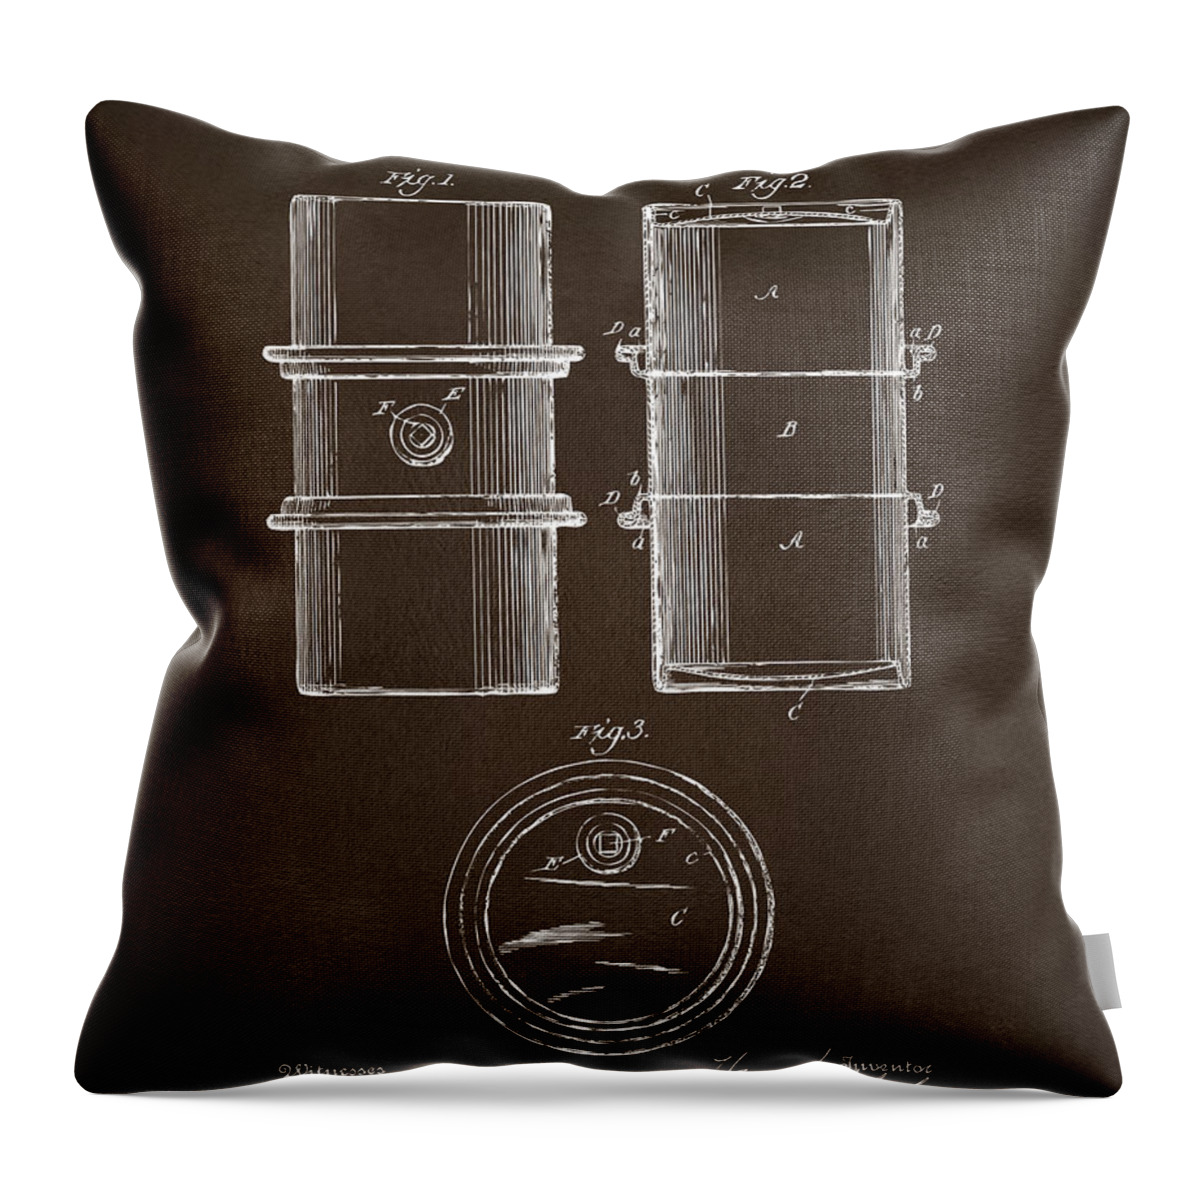 Oil Drum Throw Pillow featuring the digital art 1905 Oil Drum Patent Artwork Espresso by Nikki Marie Smith